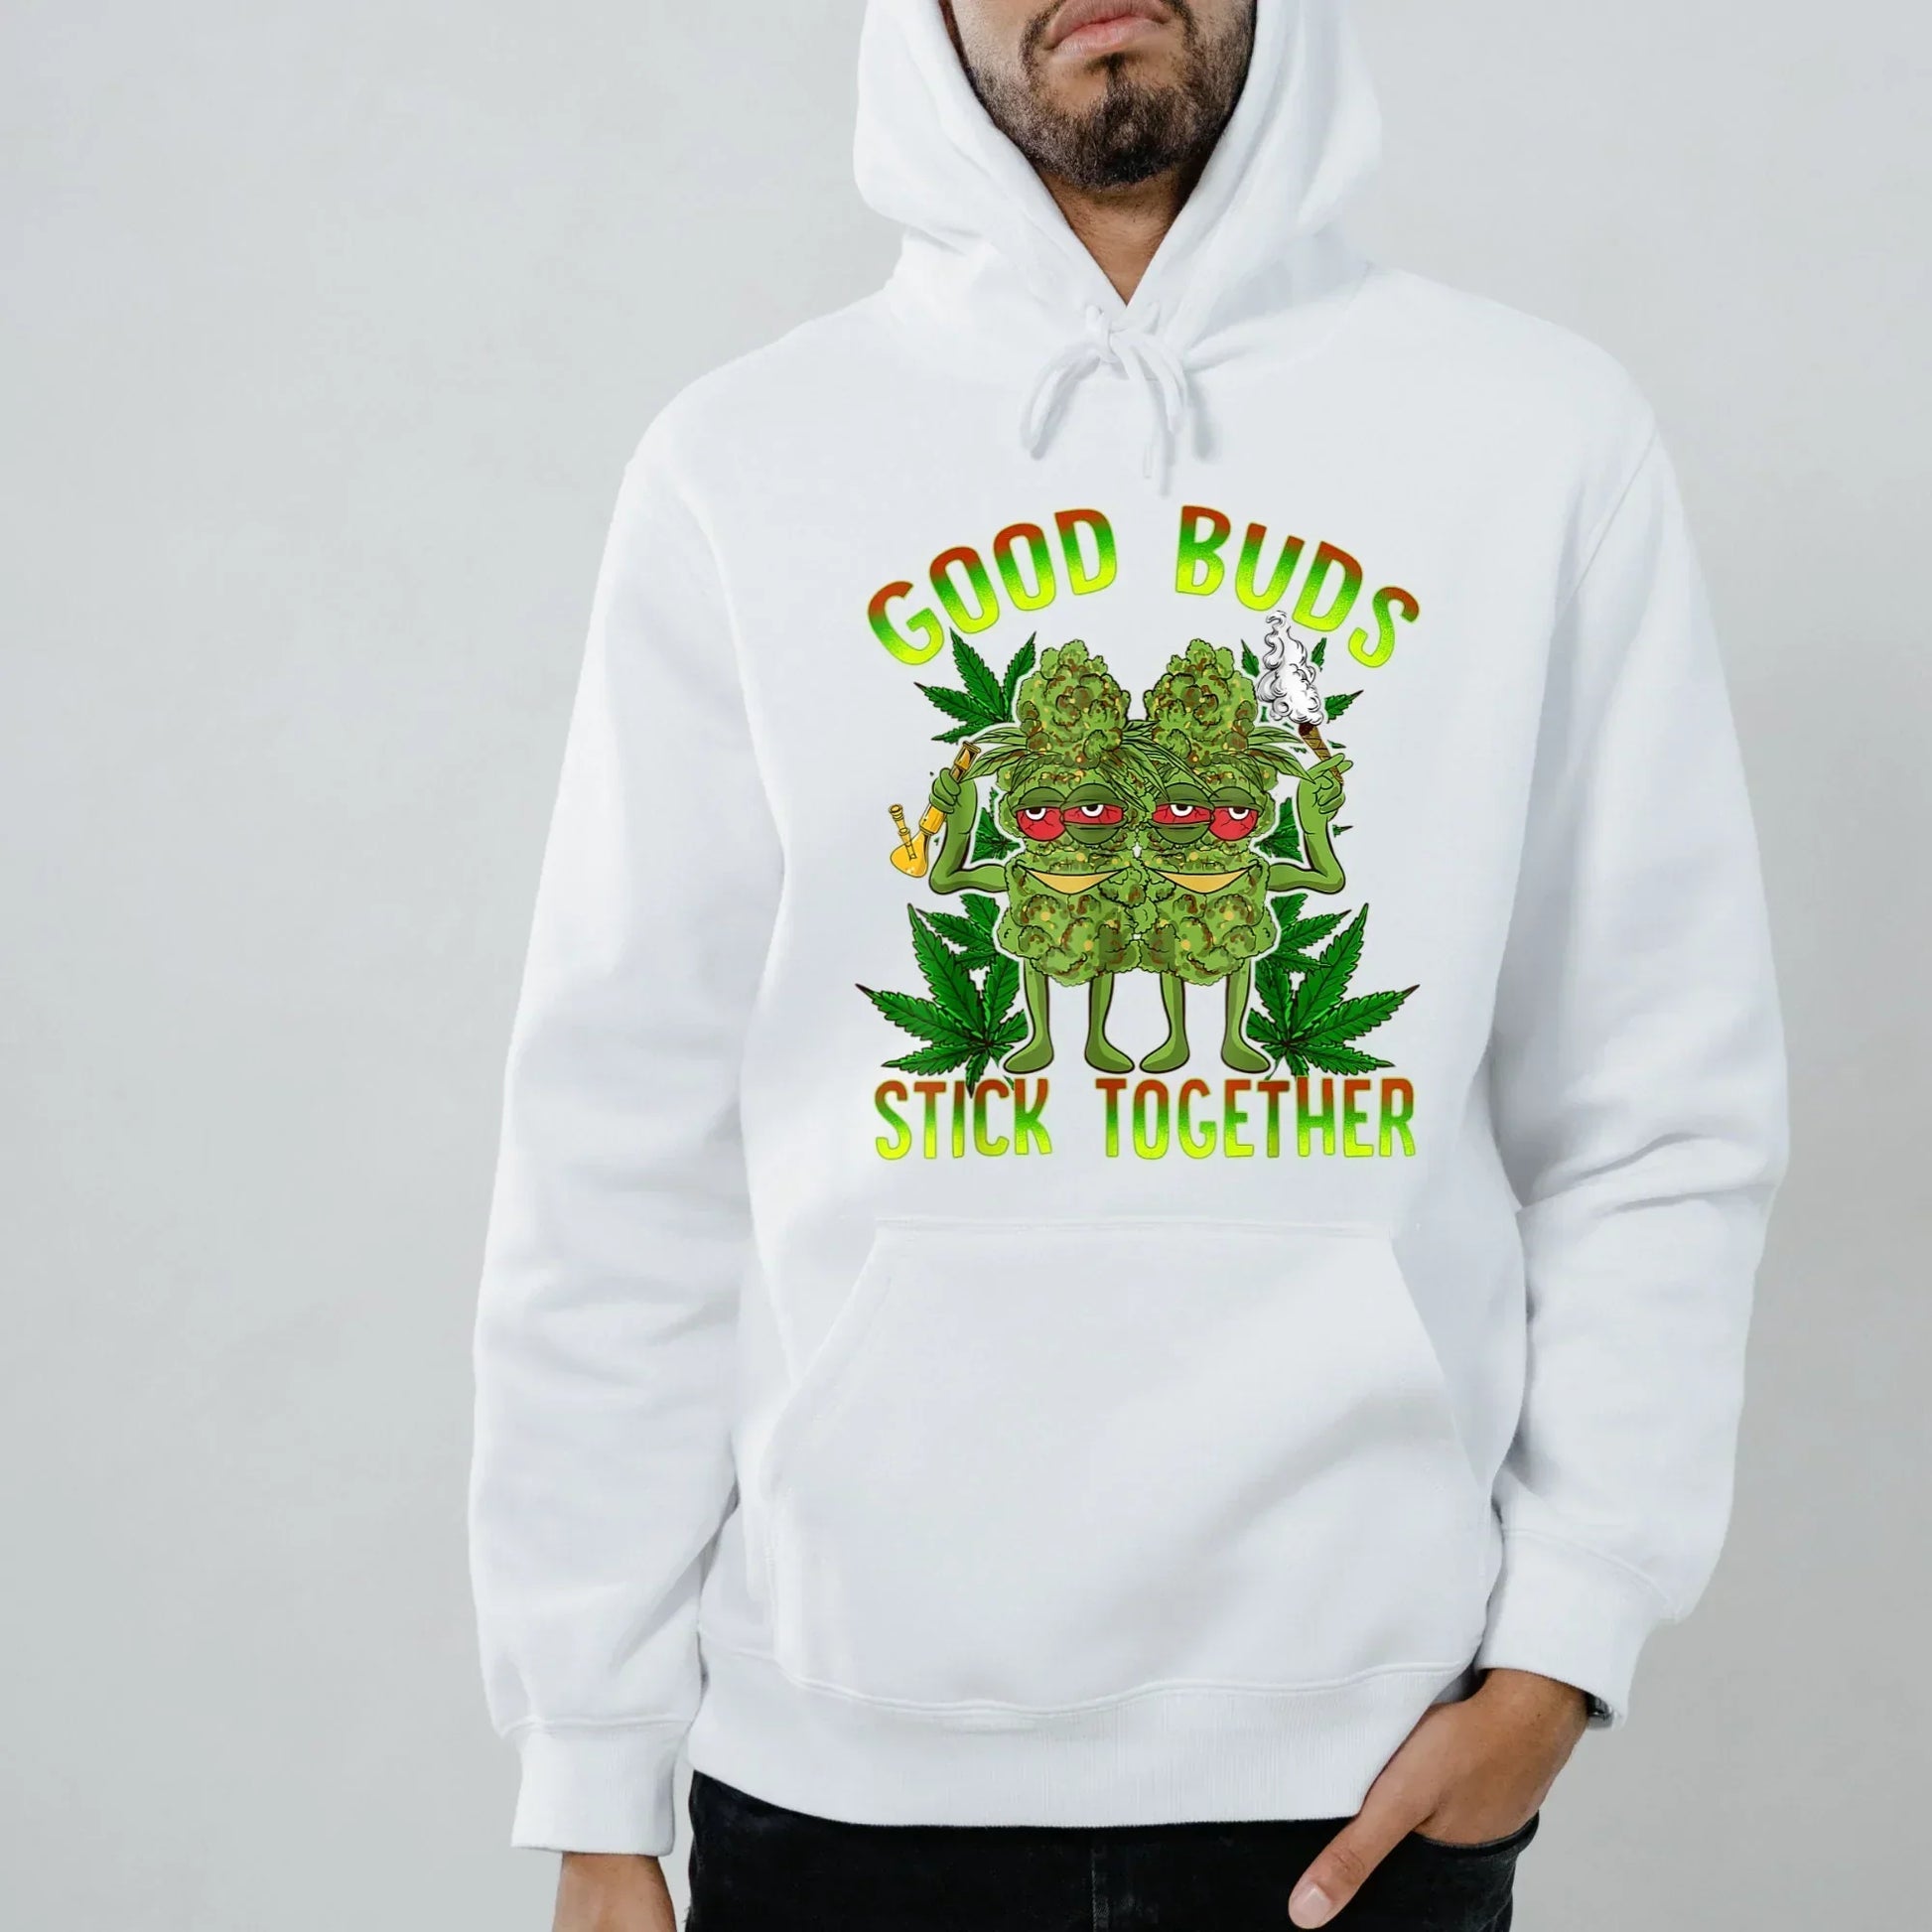 Good Buds Stick Together, Stoner Friends Shirt HMDesignStudioUS